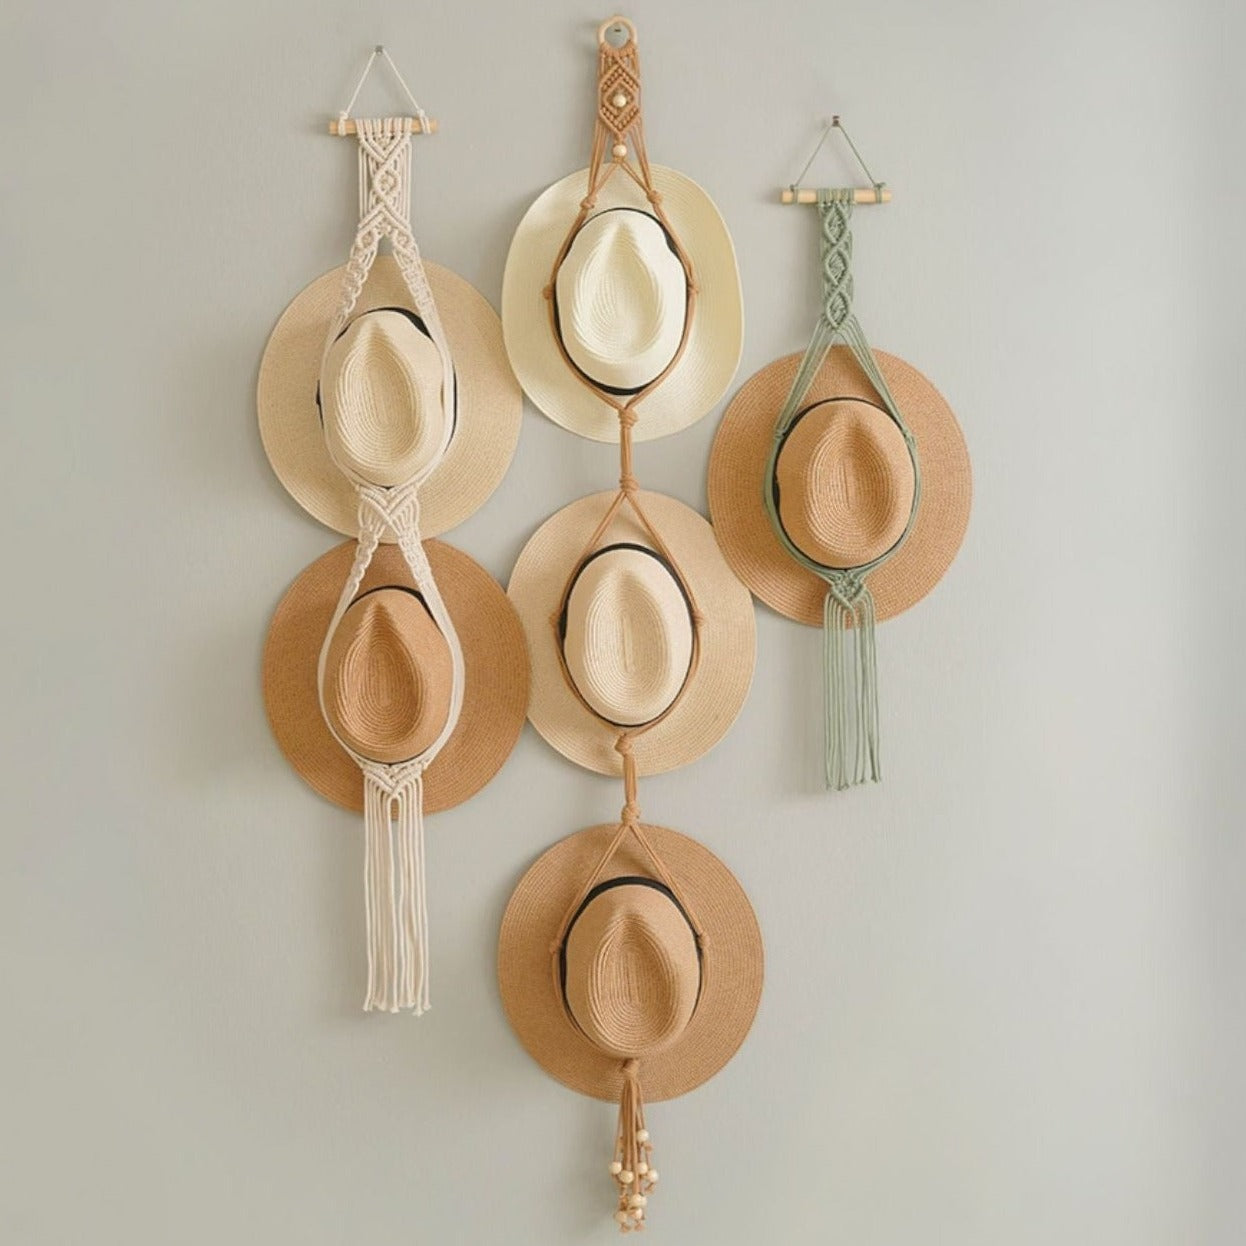 Boho Hat Hanger For Stylish and Unique Hat Storage